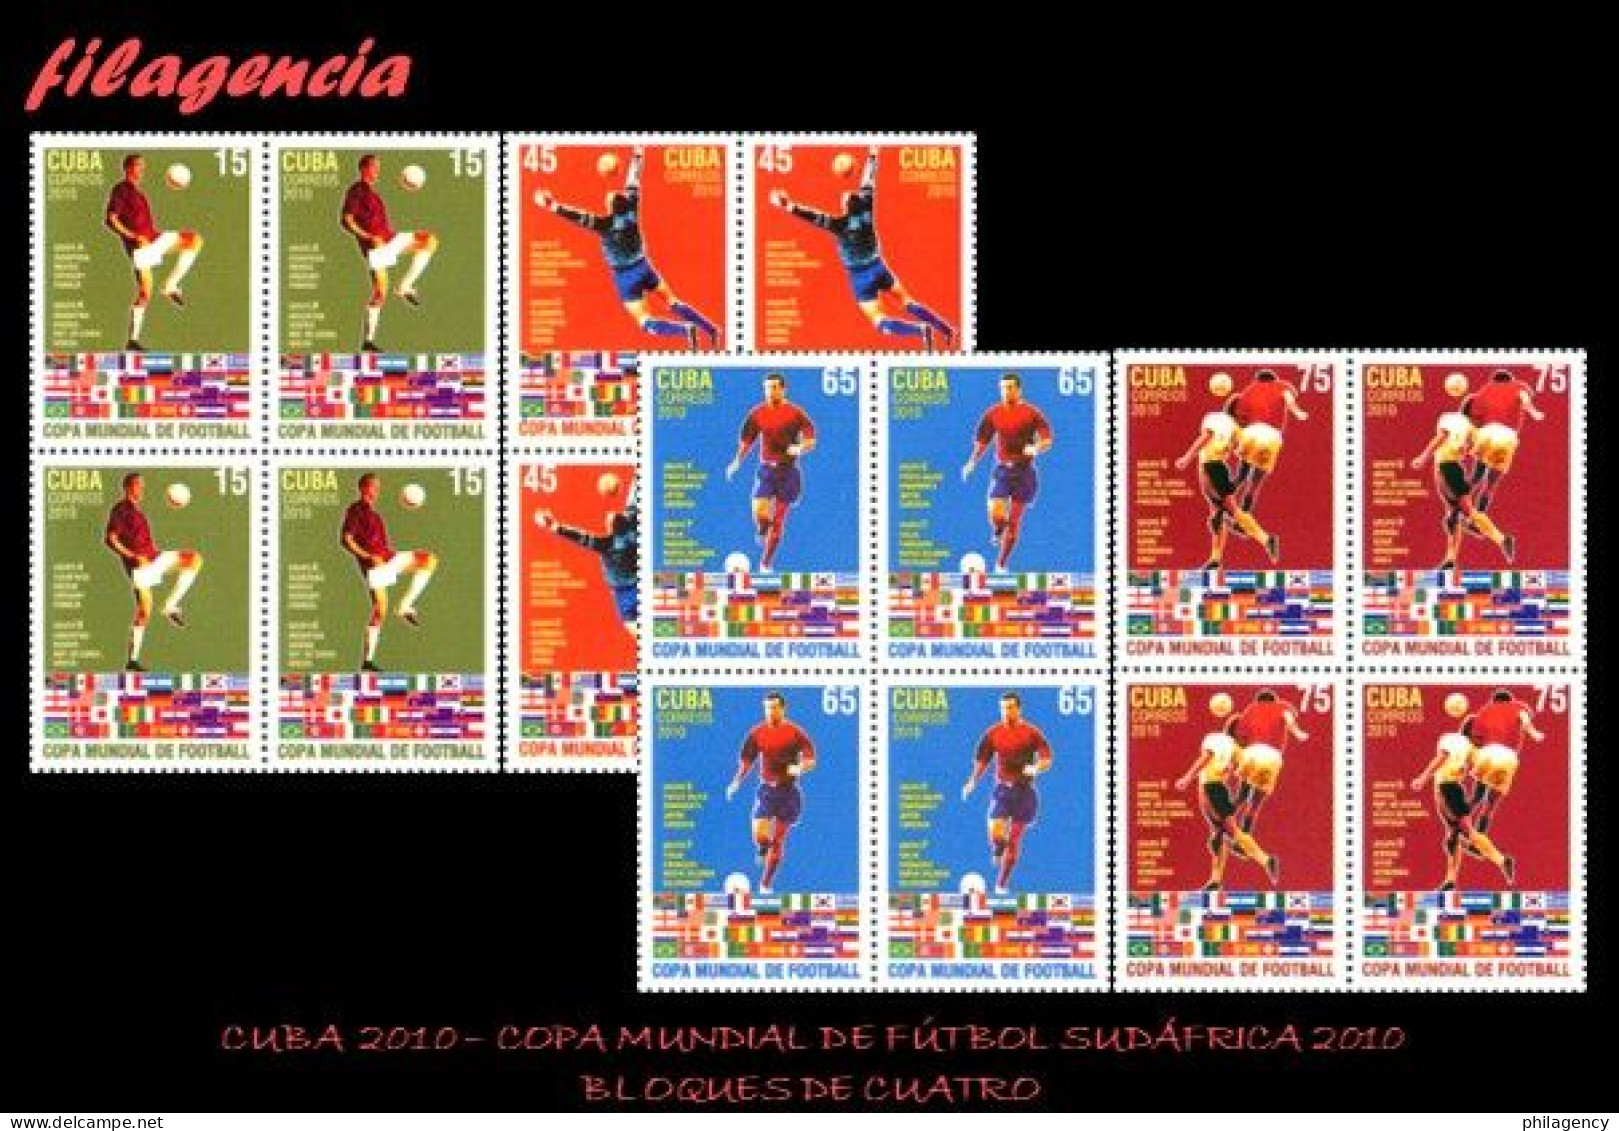 CUBA. BLOQUES DE CUATRO. 2010-15 COPA MUNDIAL DE FÚTBOL SUDÁFRICA 2010 - Unused Stamps